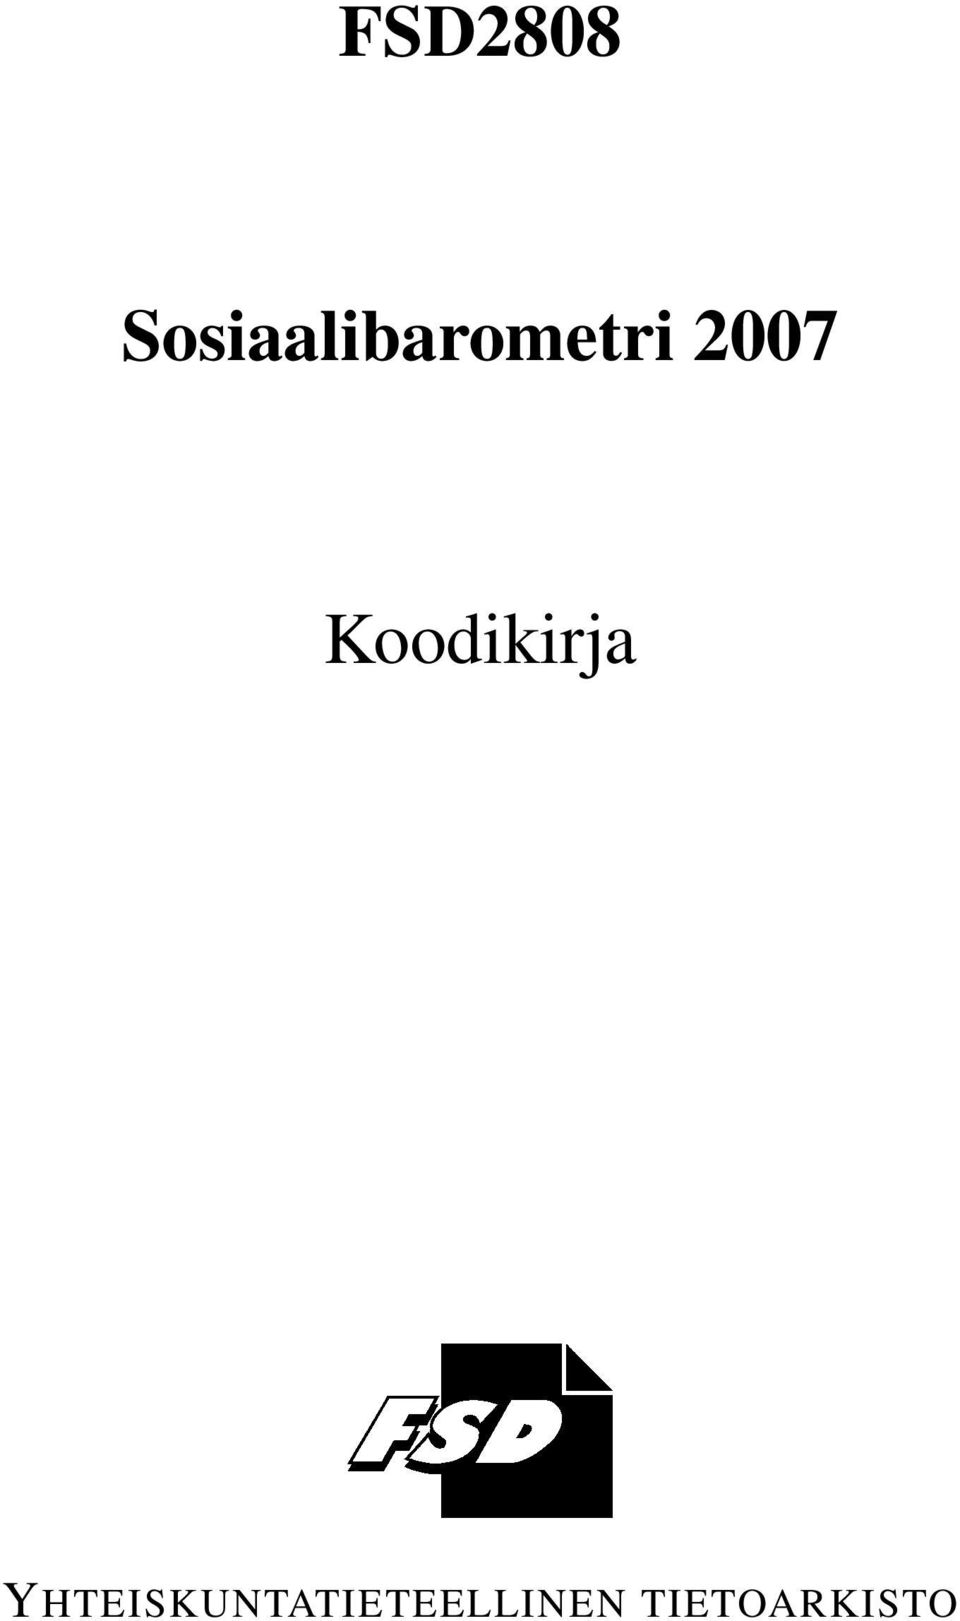 2007 Koodikirja